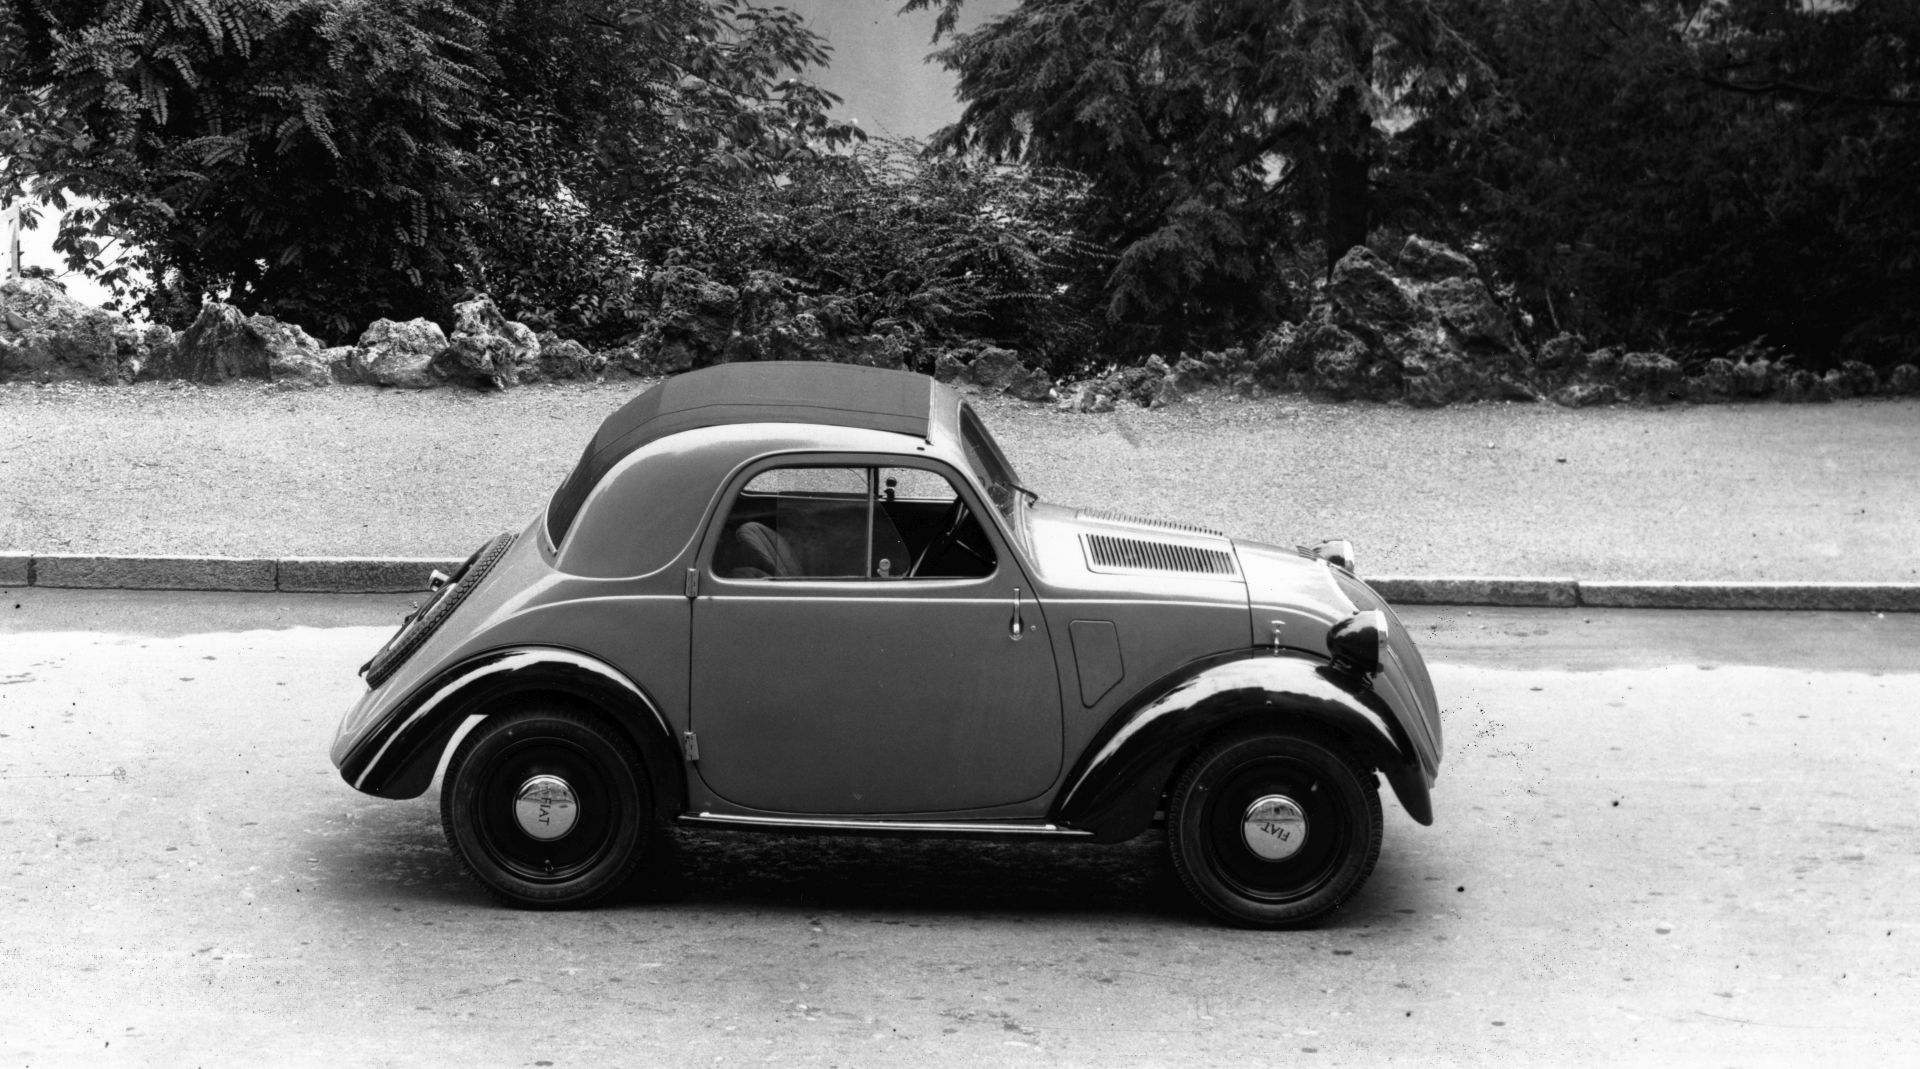 Dolazi li novi Fiat Topolino gotovo 100 godina nakon premijere originala?